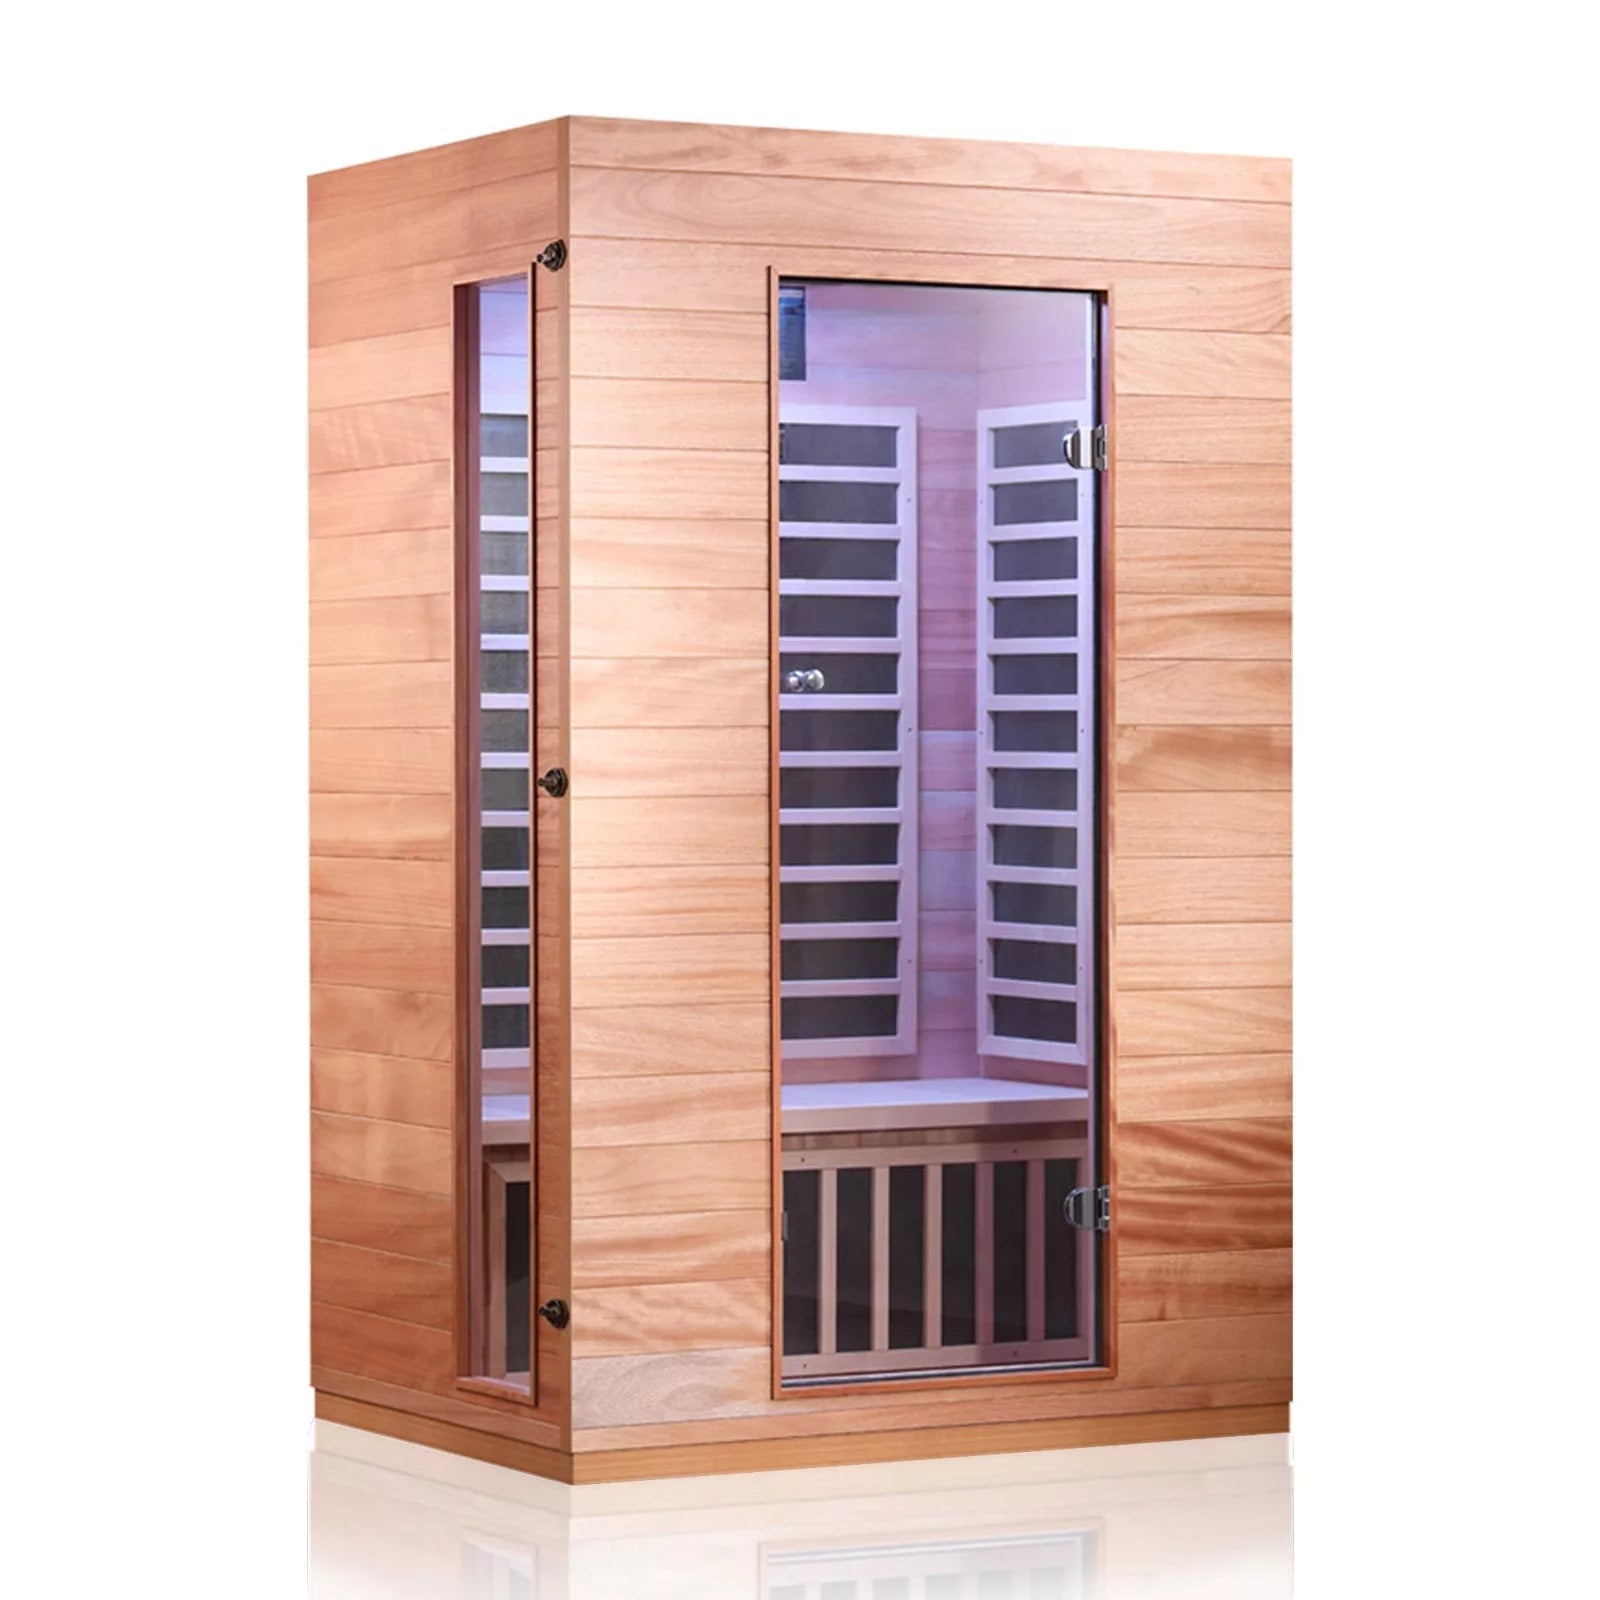 2-person Indoor Bluetooth Low EMF Far Infrared Saunas In Okoume & Hemlock Wood - The Sauna World